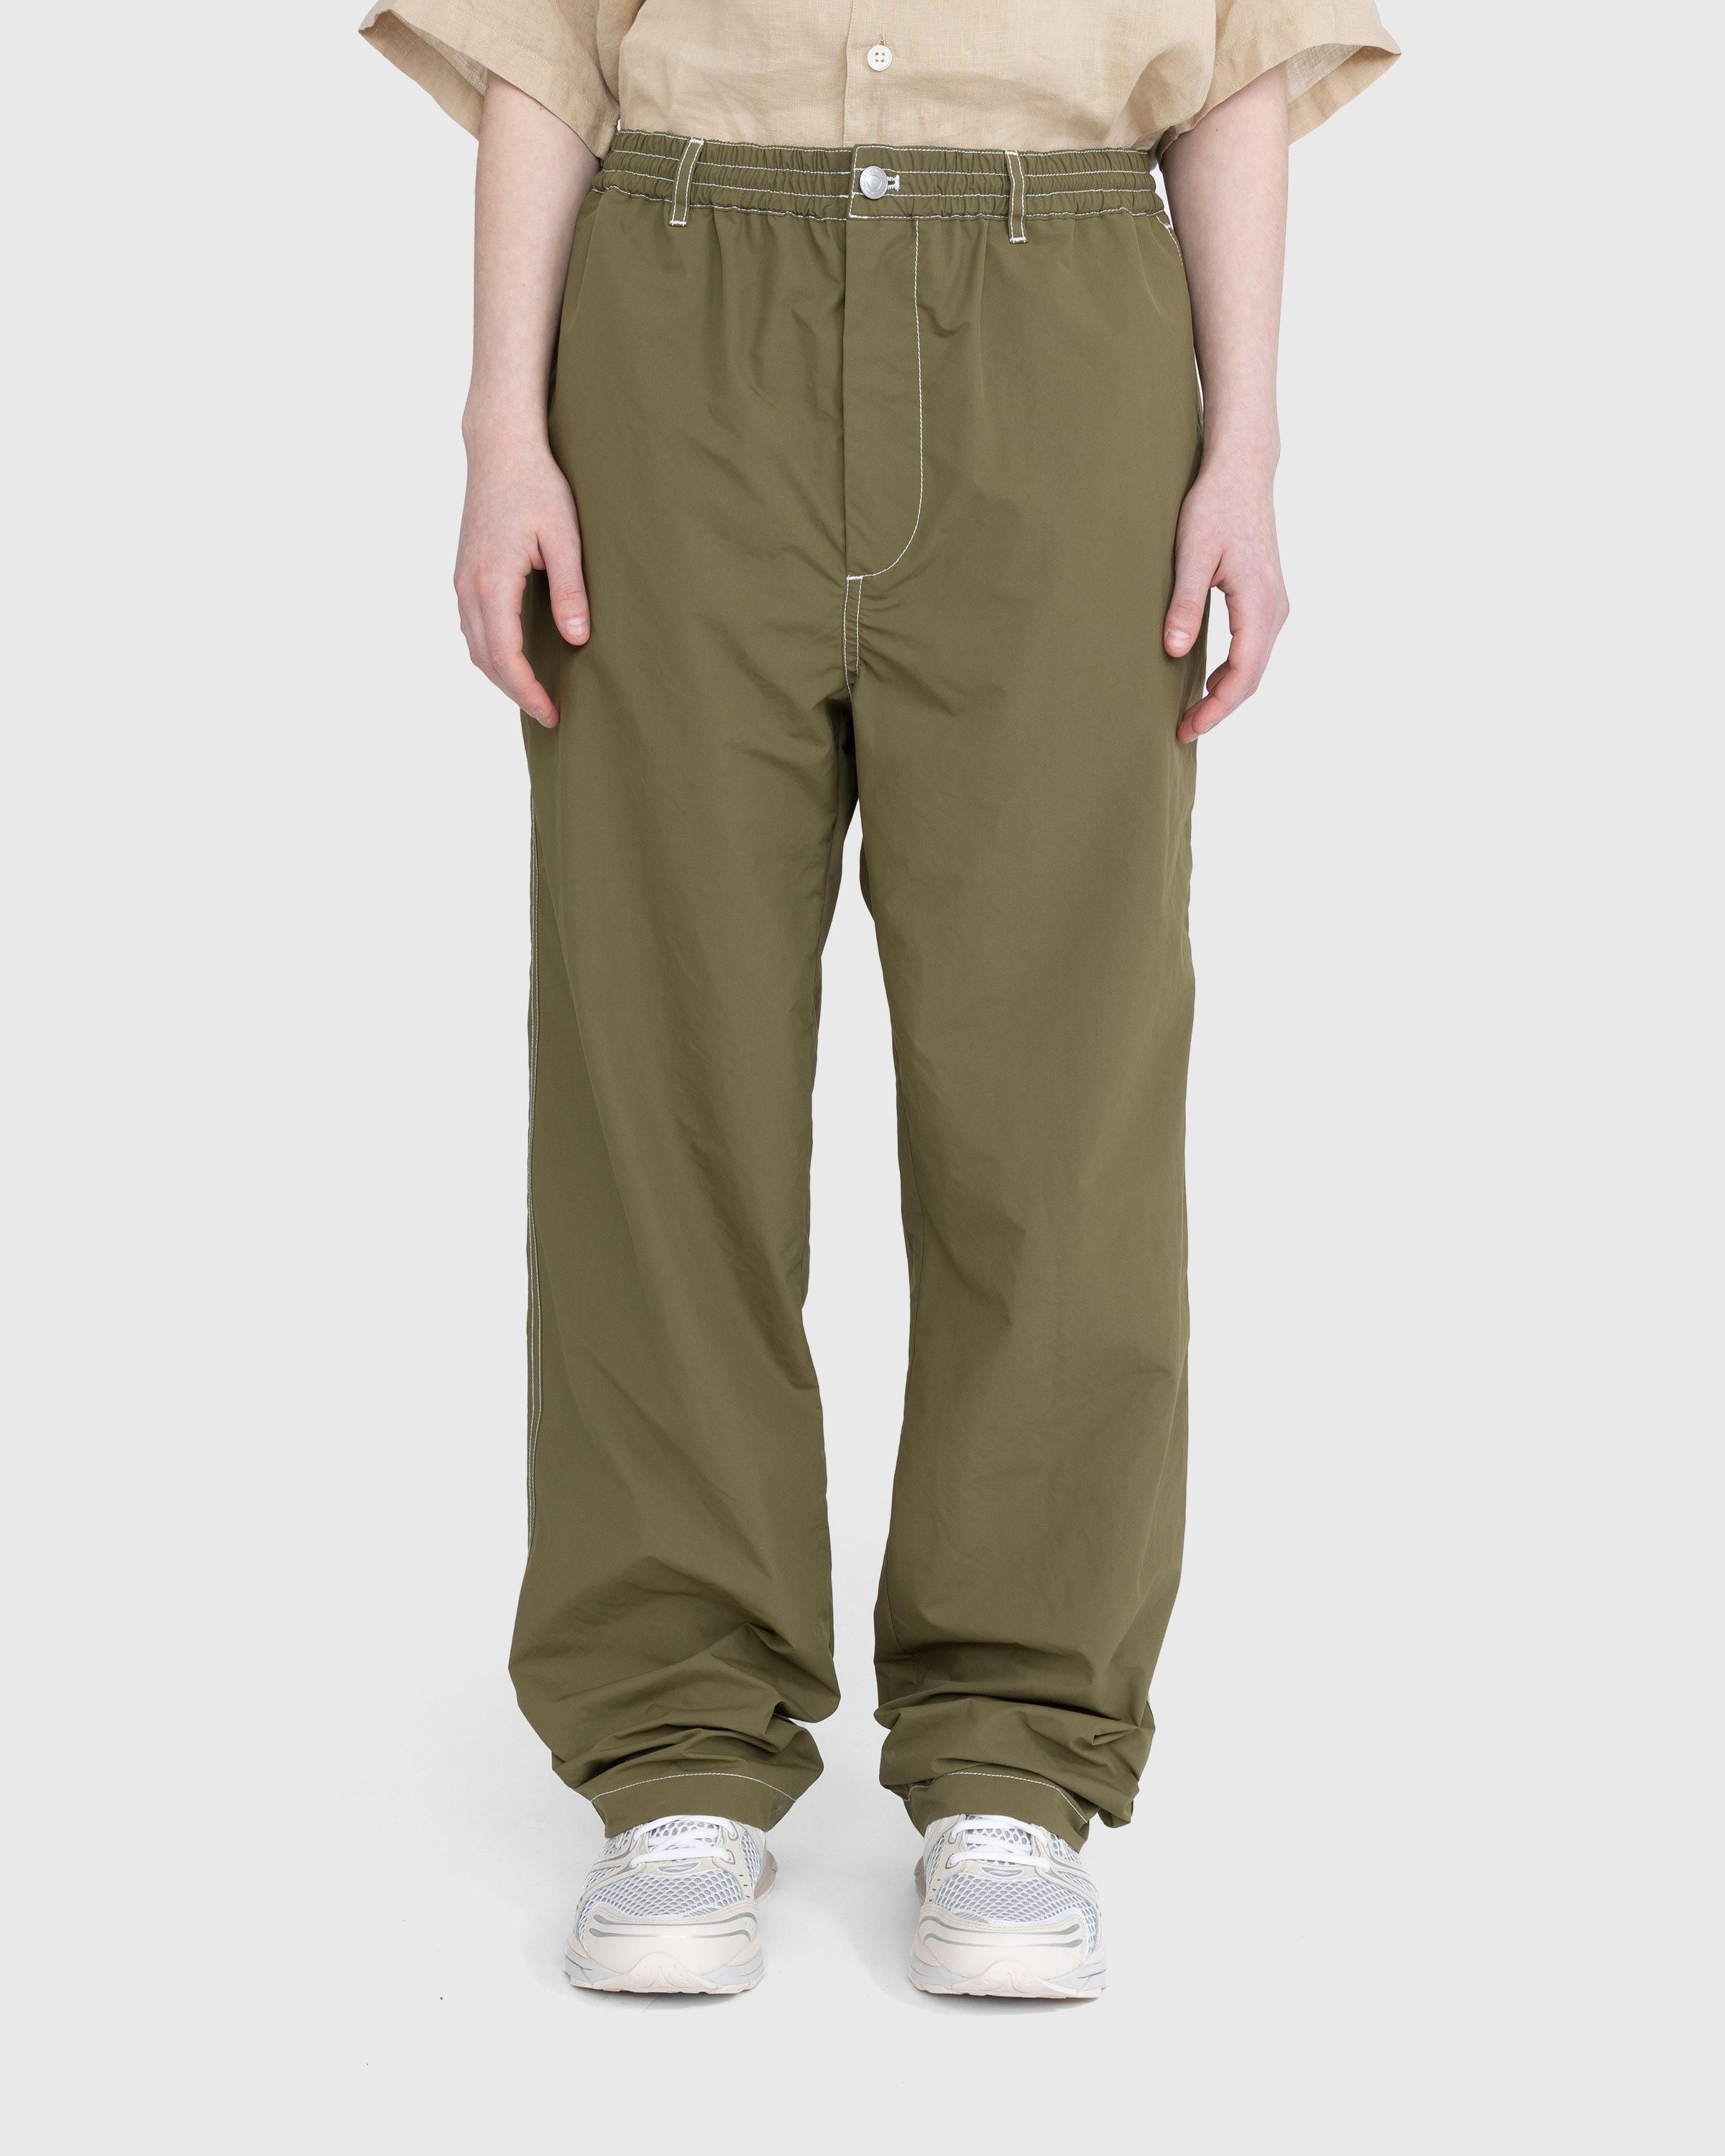 Highsnobiety - Contrast Stitch Pants Khaki - Clothing - Green - Image 2